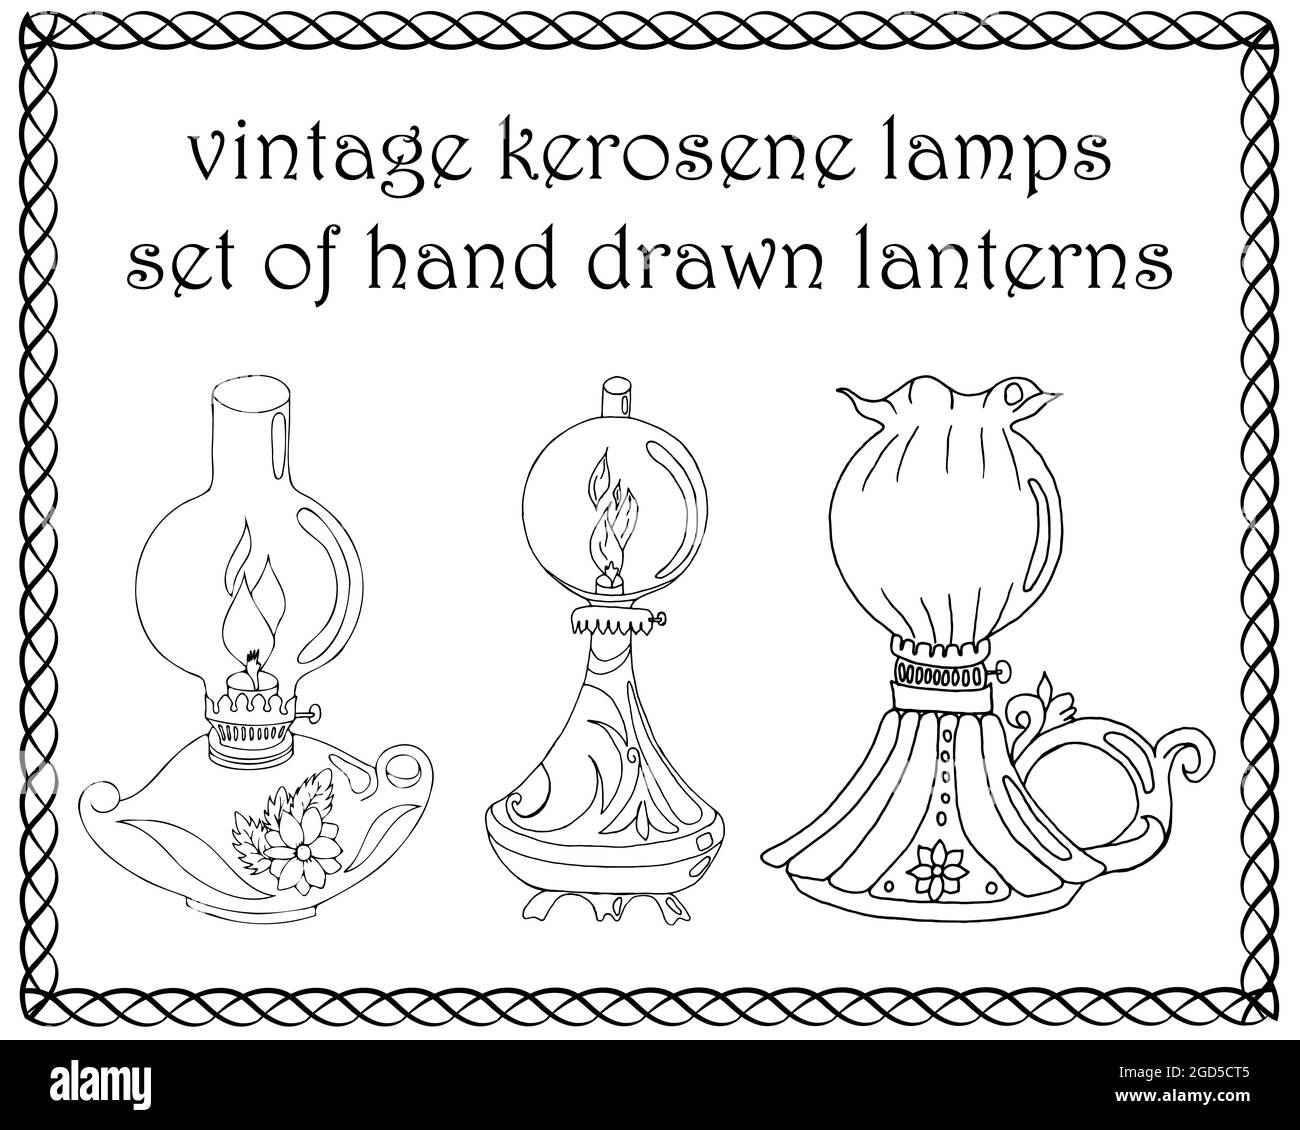 Set of vintage kerosene lamps, hand drawn lanterns Stock Vector